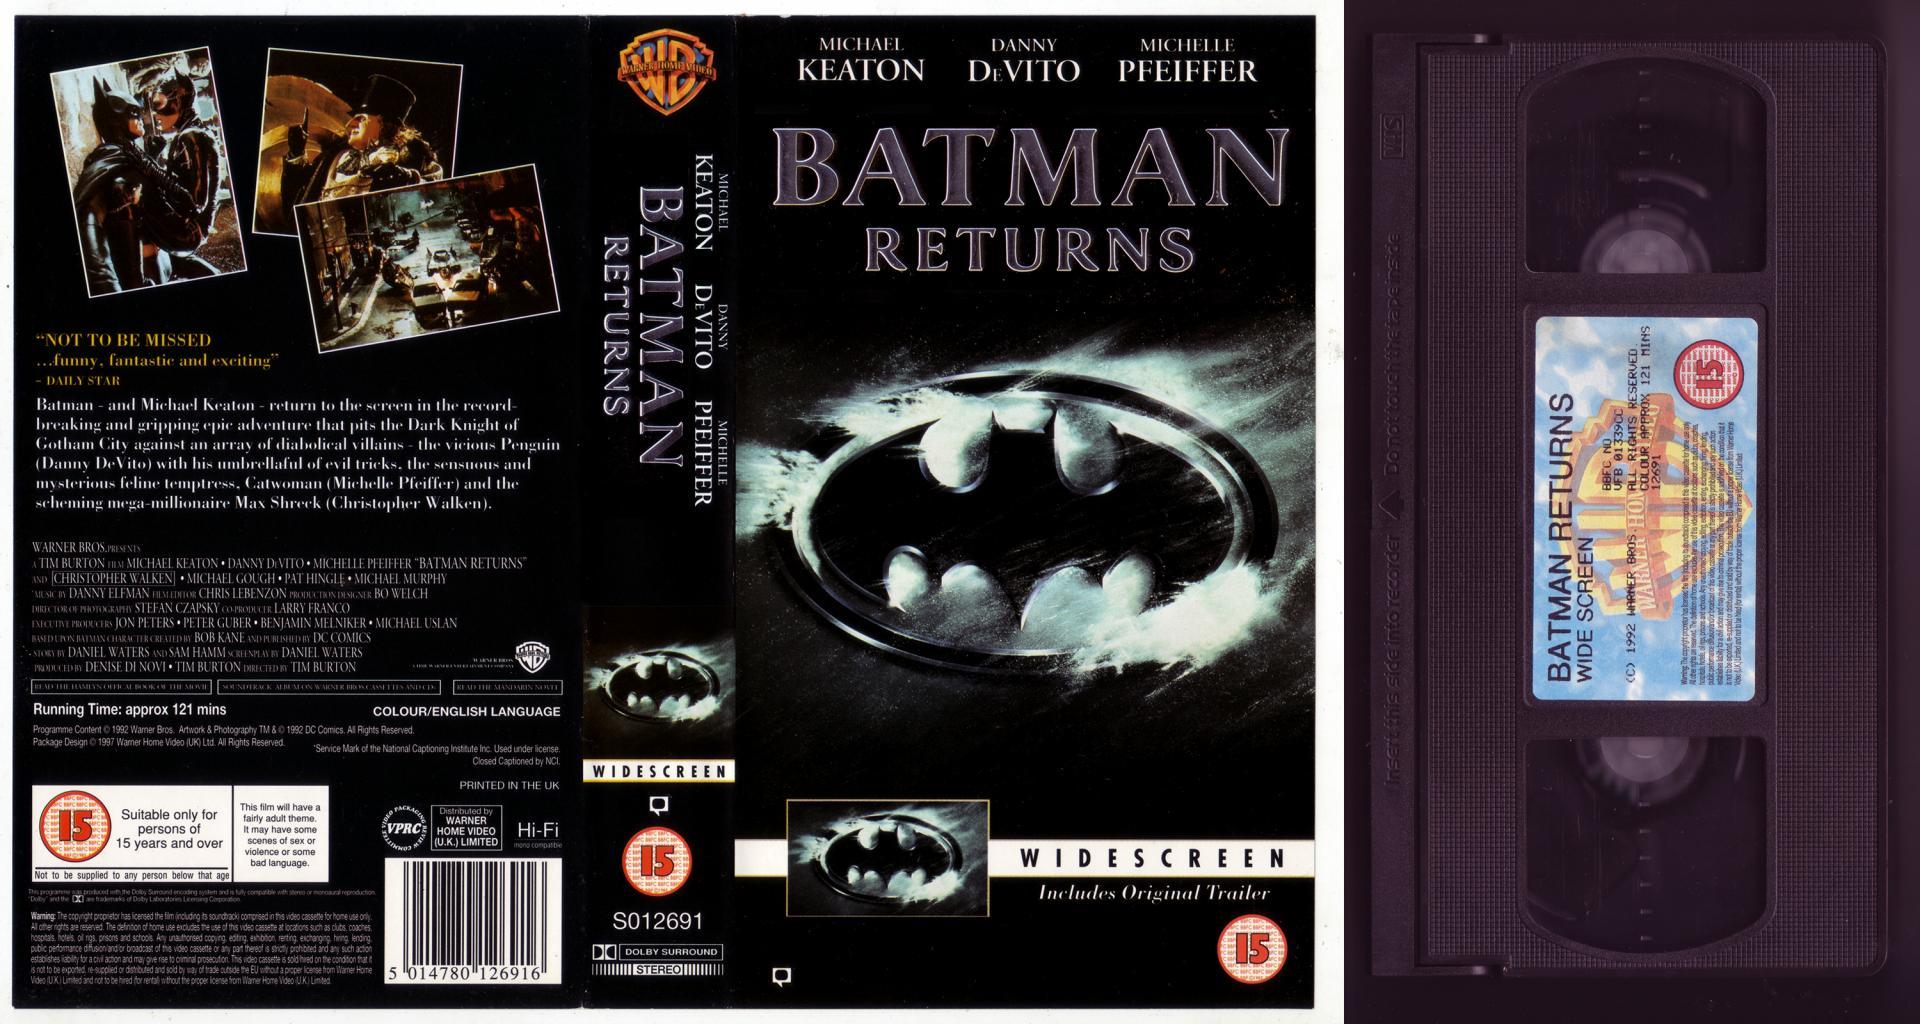 Image gallery for Batman Returns - FilmAffinity